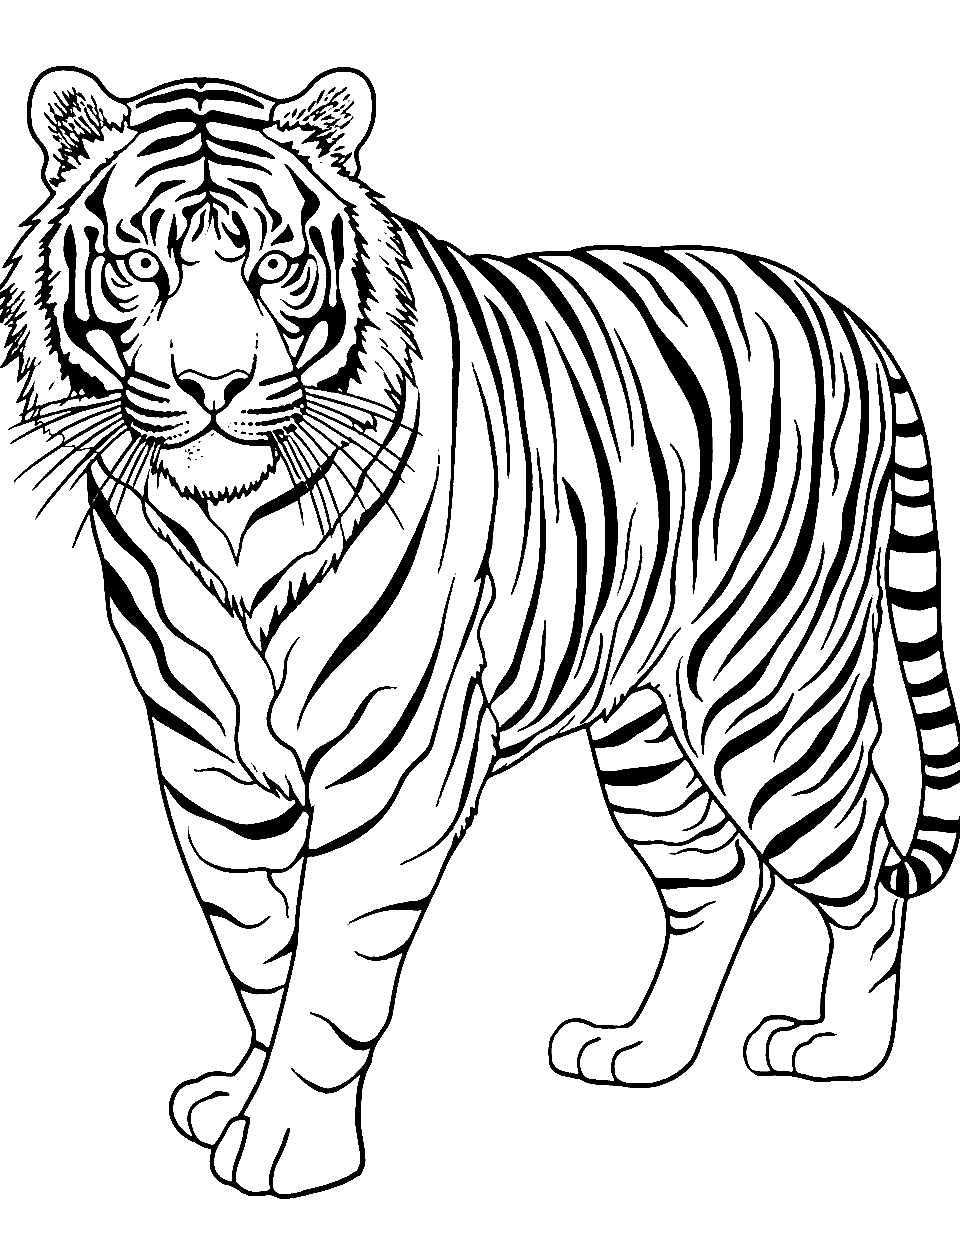 Sumatran Stripes Tiger Coloring Page - The unique Sumatran tiger, with its distinct stripe pattern.